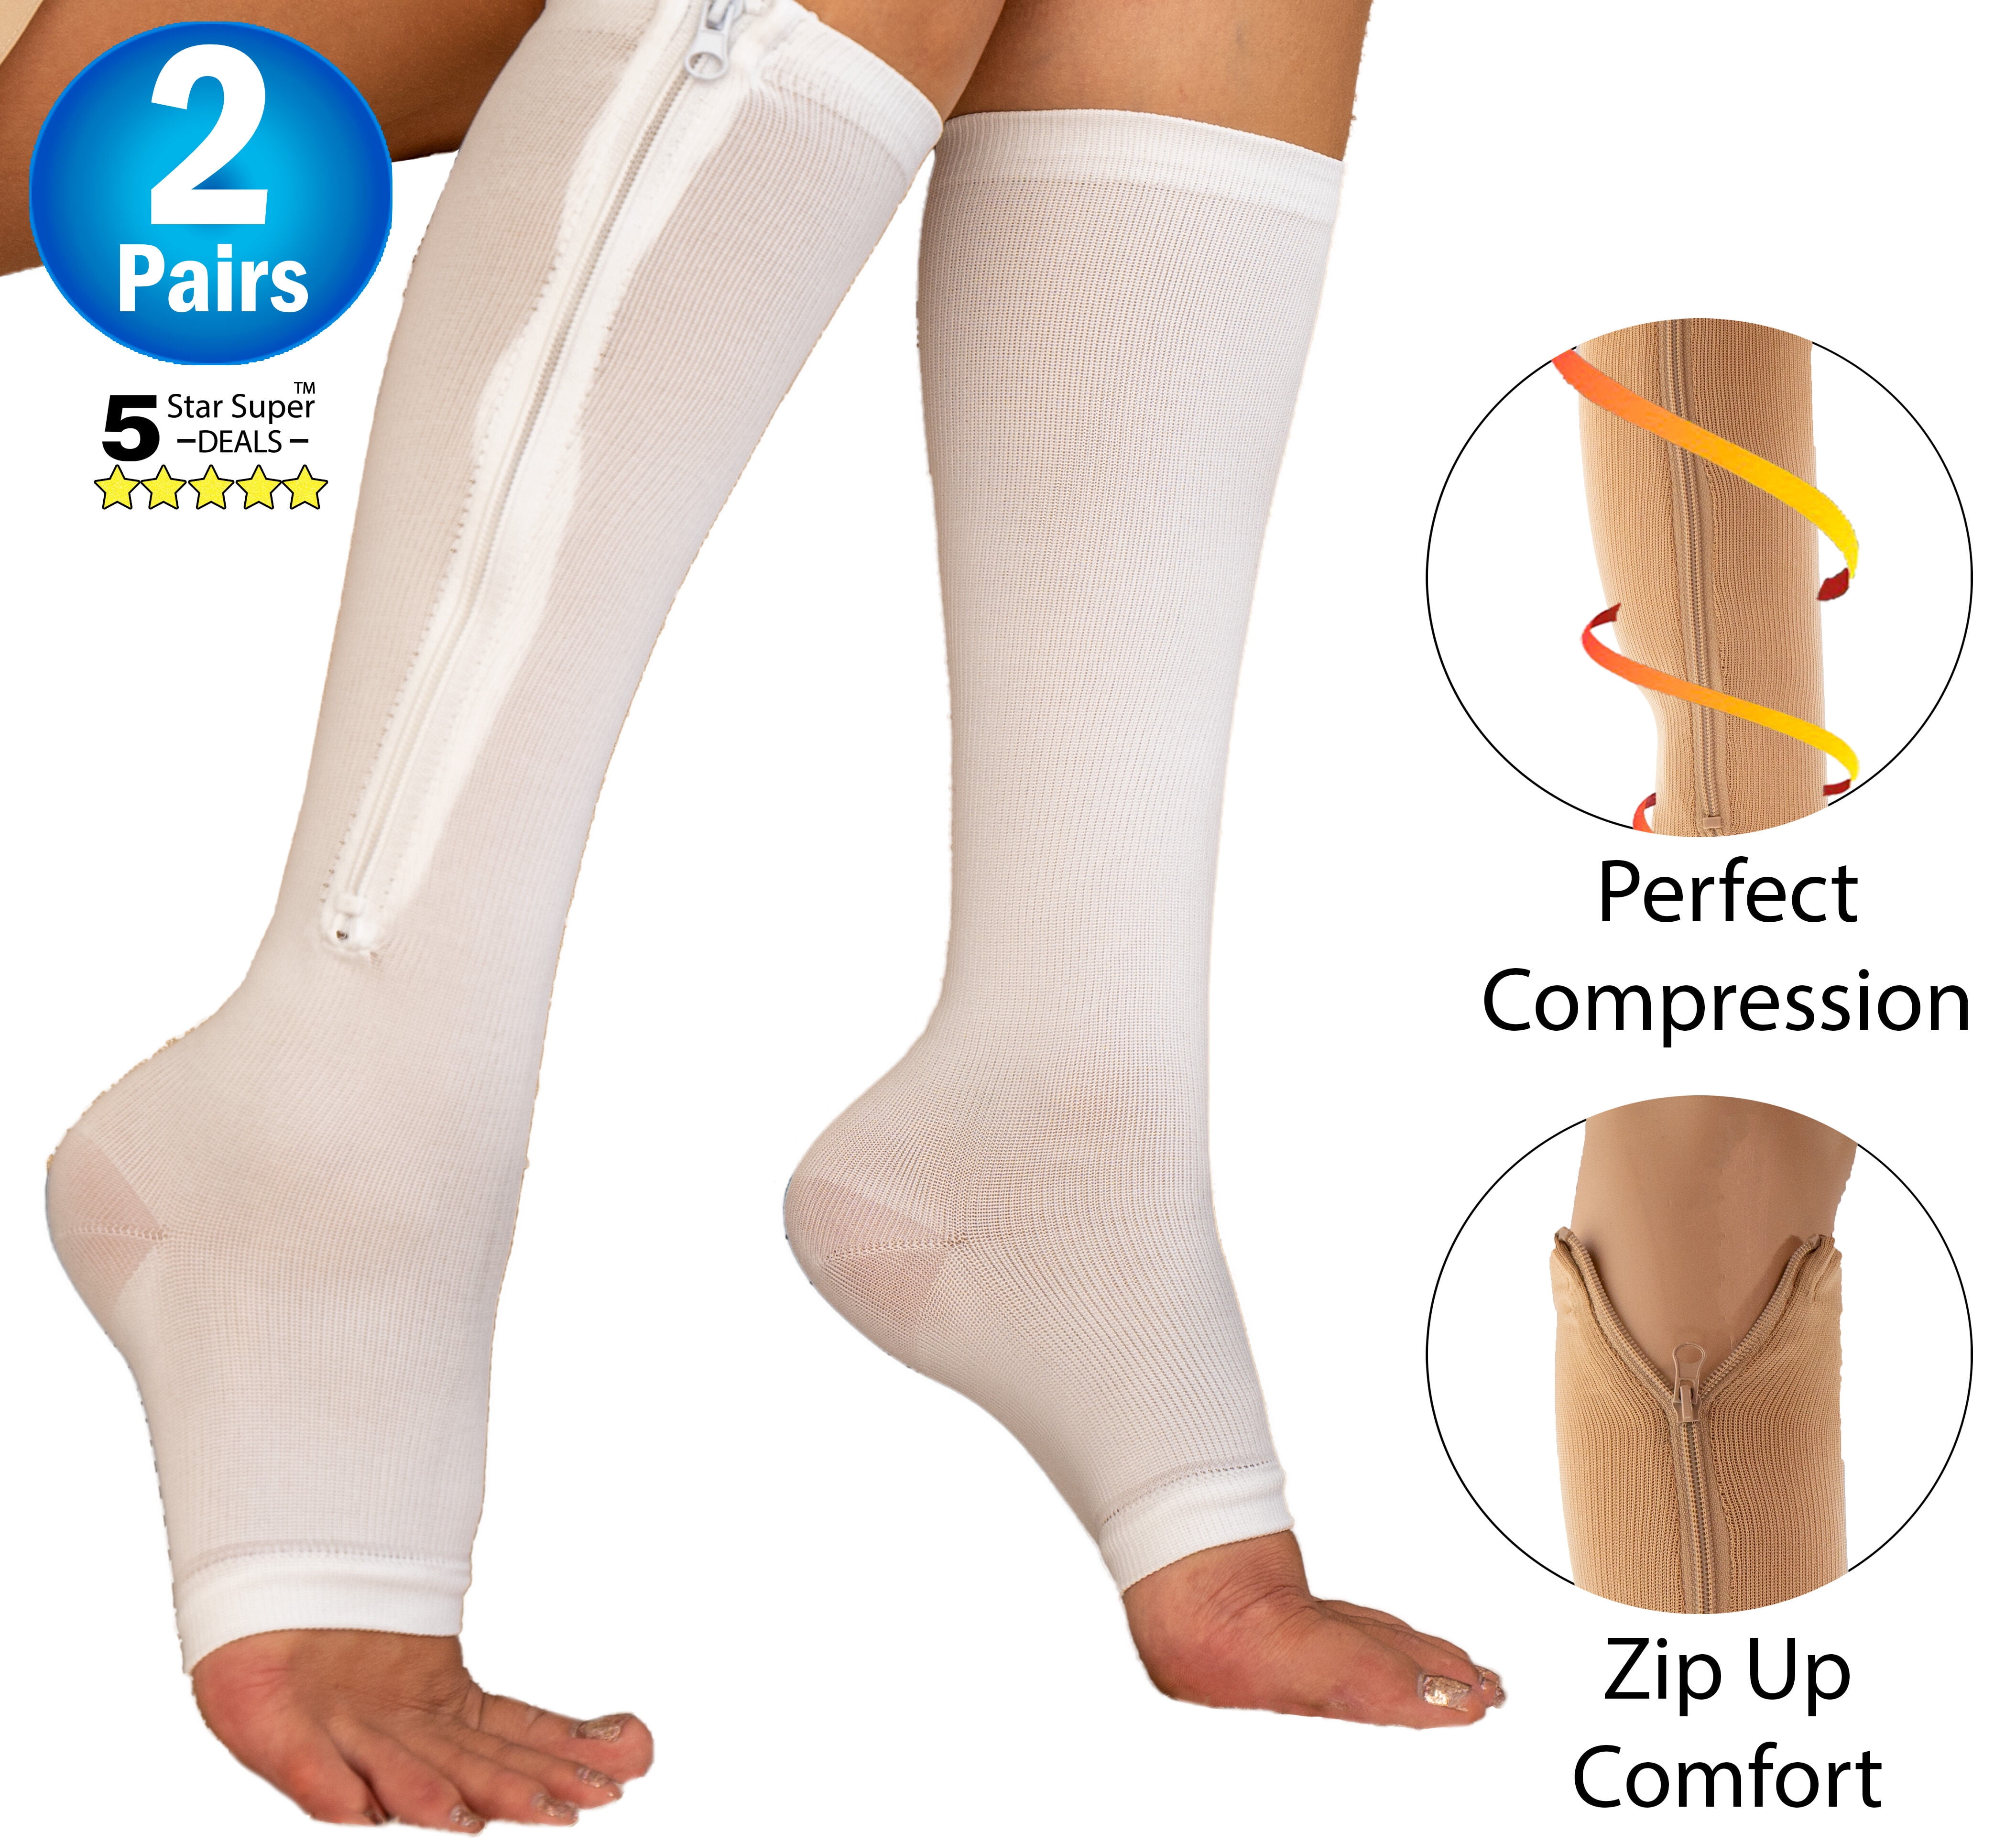  KEKING® Zipper Compression Socks for Men Women, Open Toe,  20-30mmHg Firm Support Knee High Zipper Compression Stockings for Wide Calf  - Varicose Veins, DVT, Shin Splints, Edema, Nursing, Beige XL 